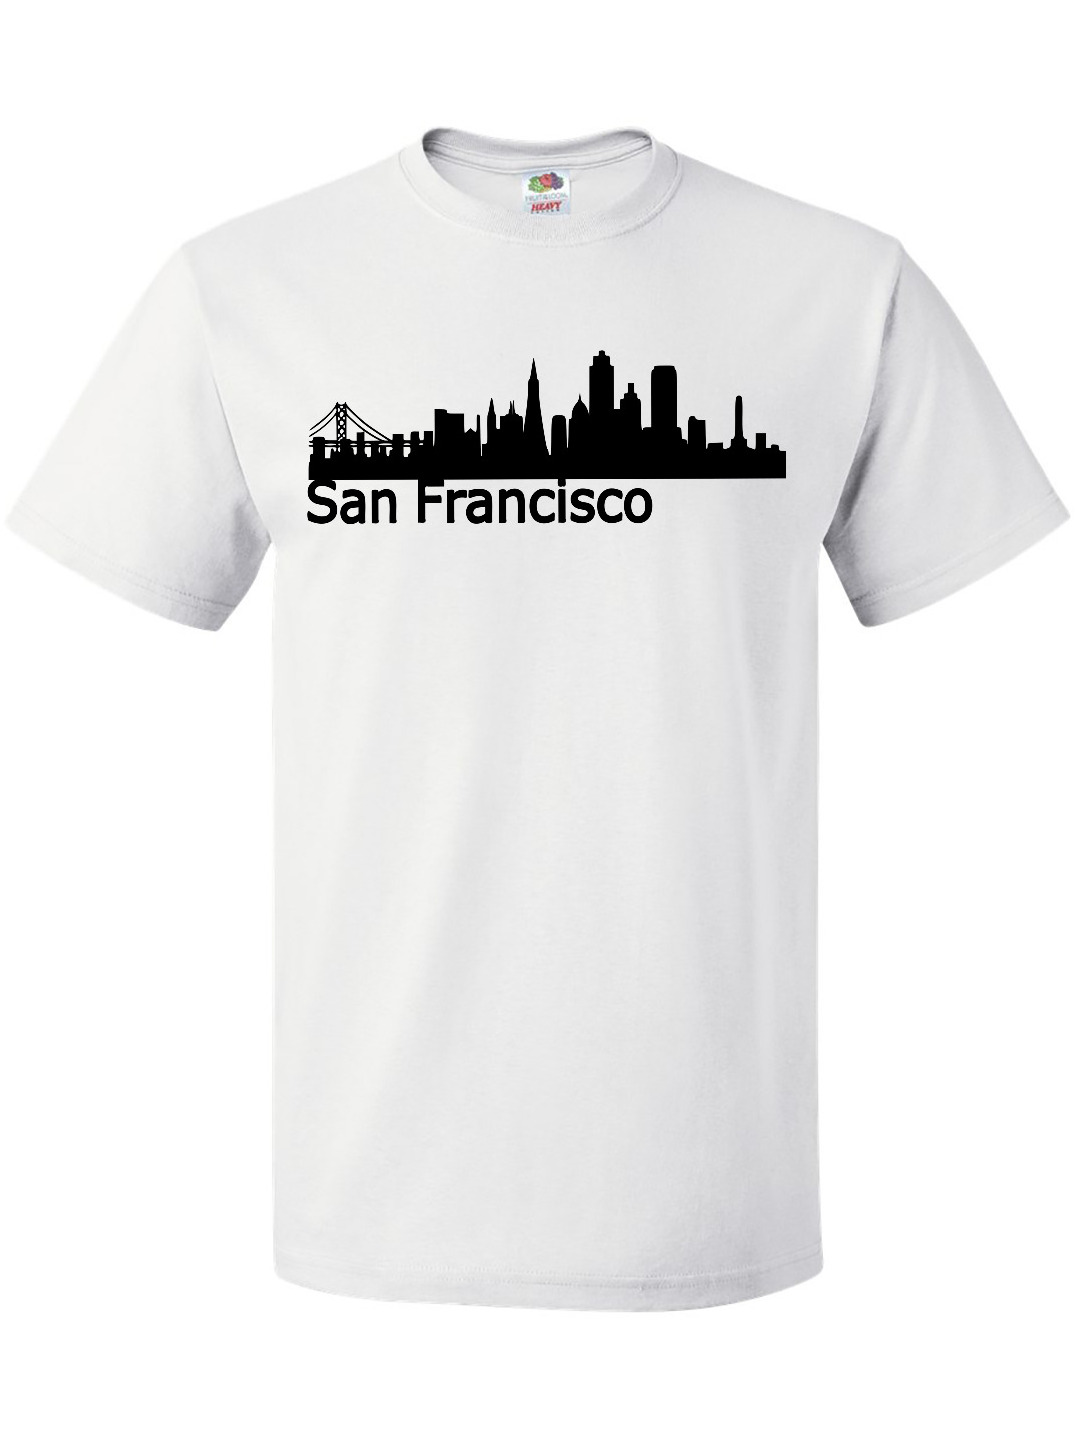 Inktastic San Francisco Skyline T-Shirt - image 1 of 4